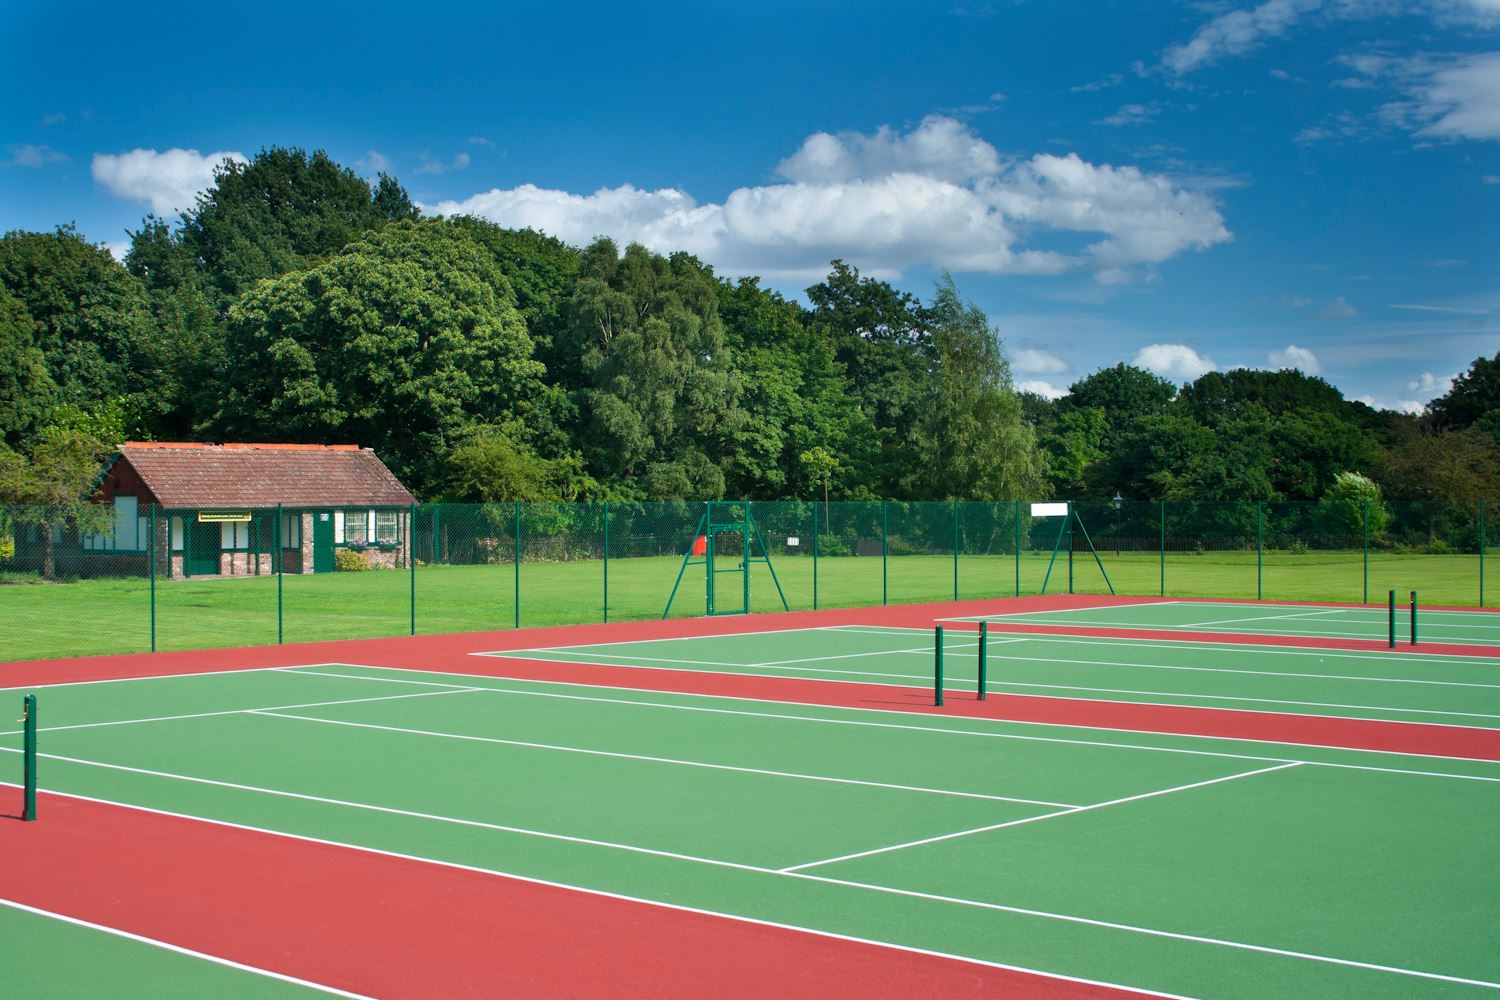 Mersey Bowmen Tennis Club